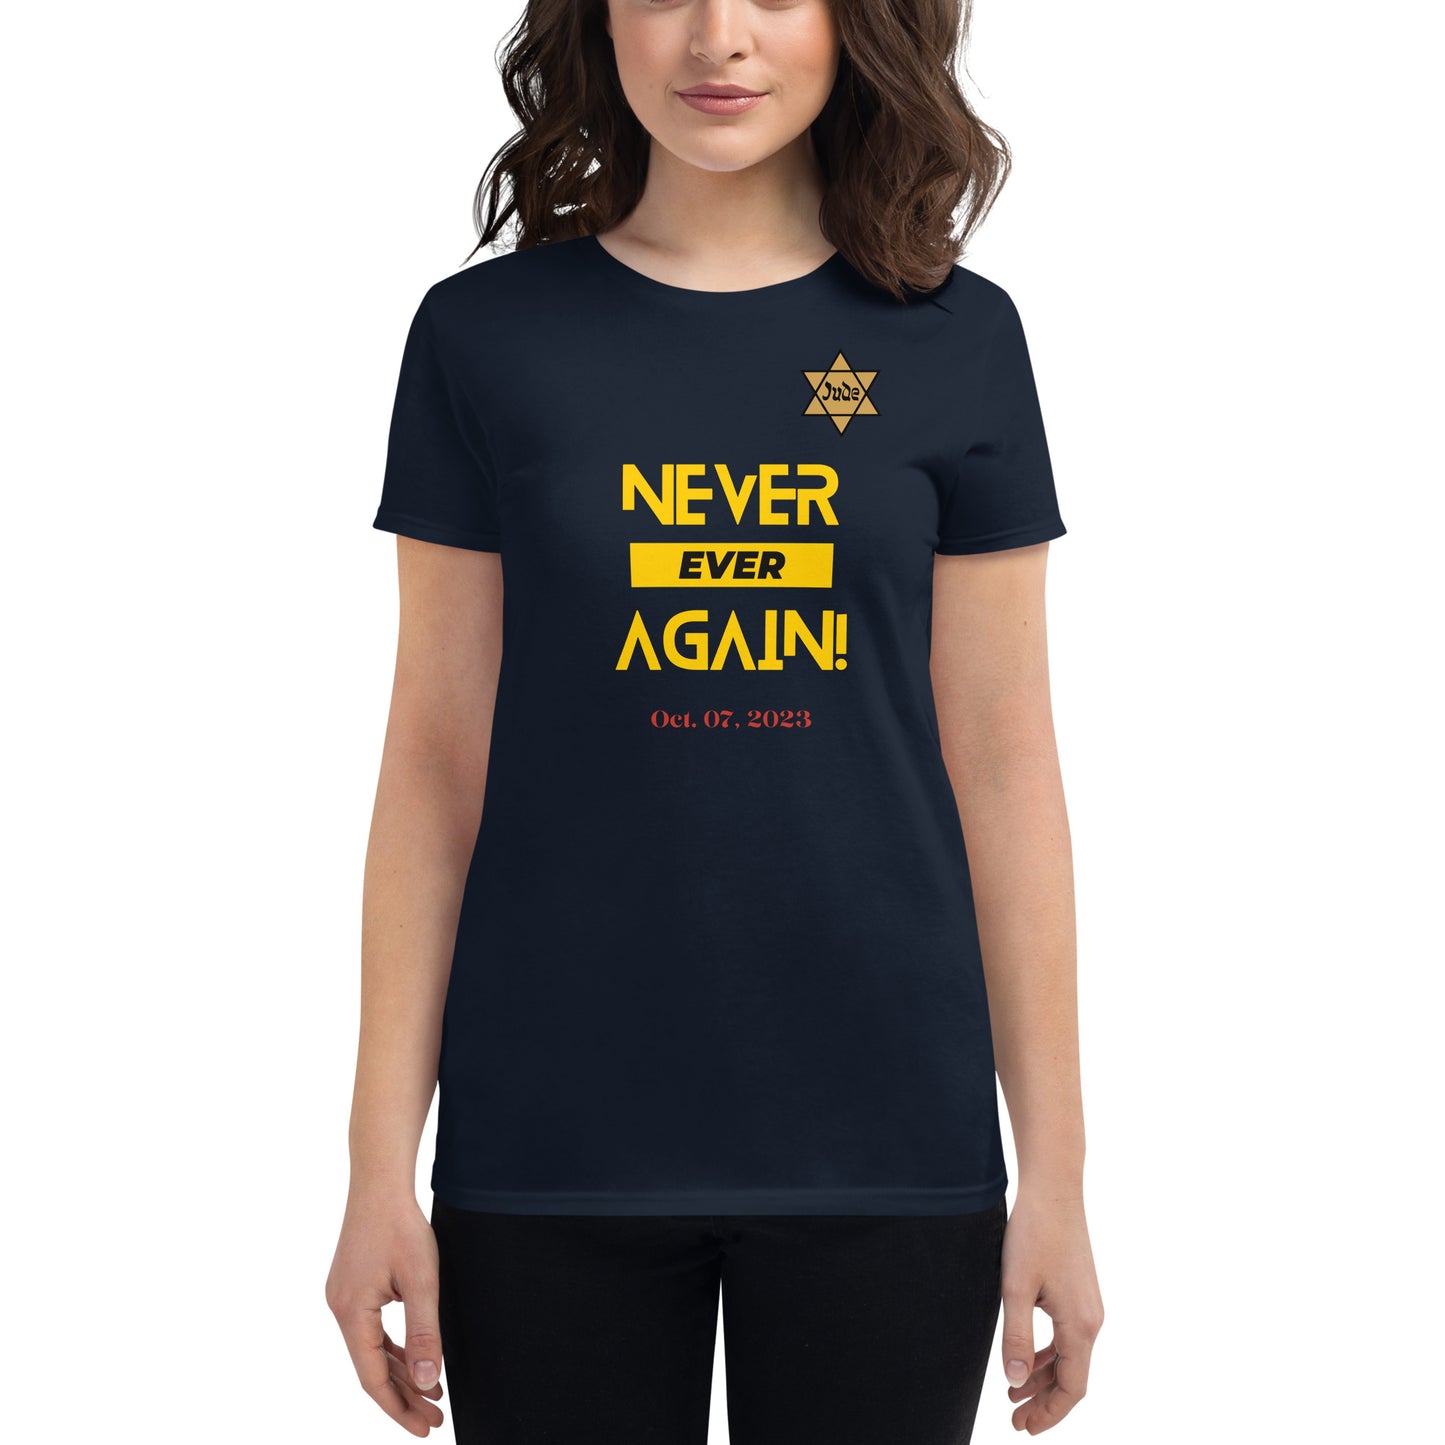 Never Ever Again - Women's short sleeve t-shirt (5 colors)